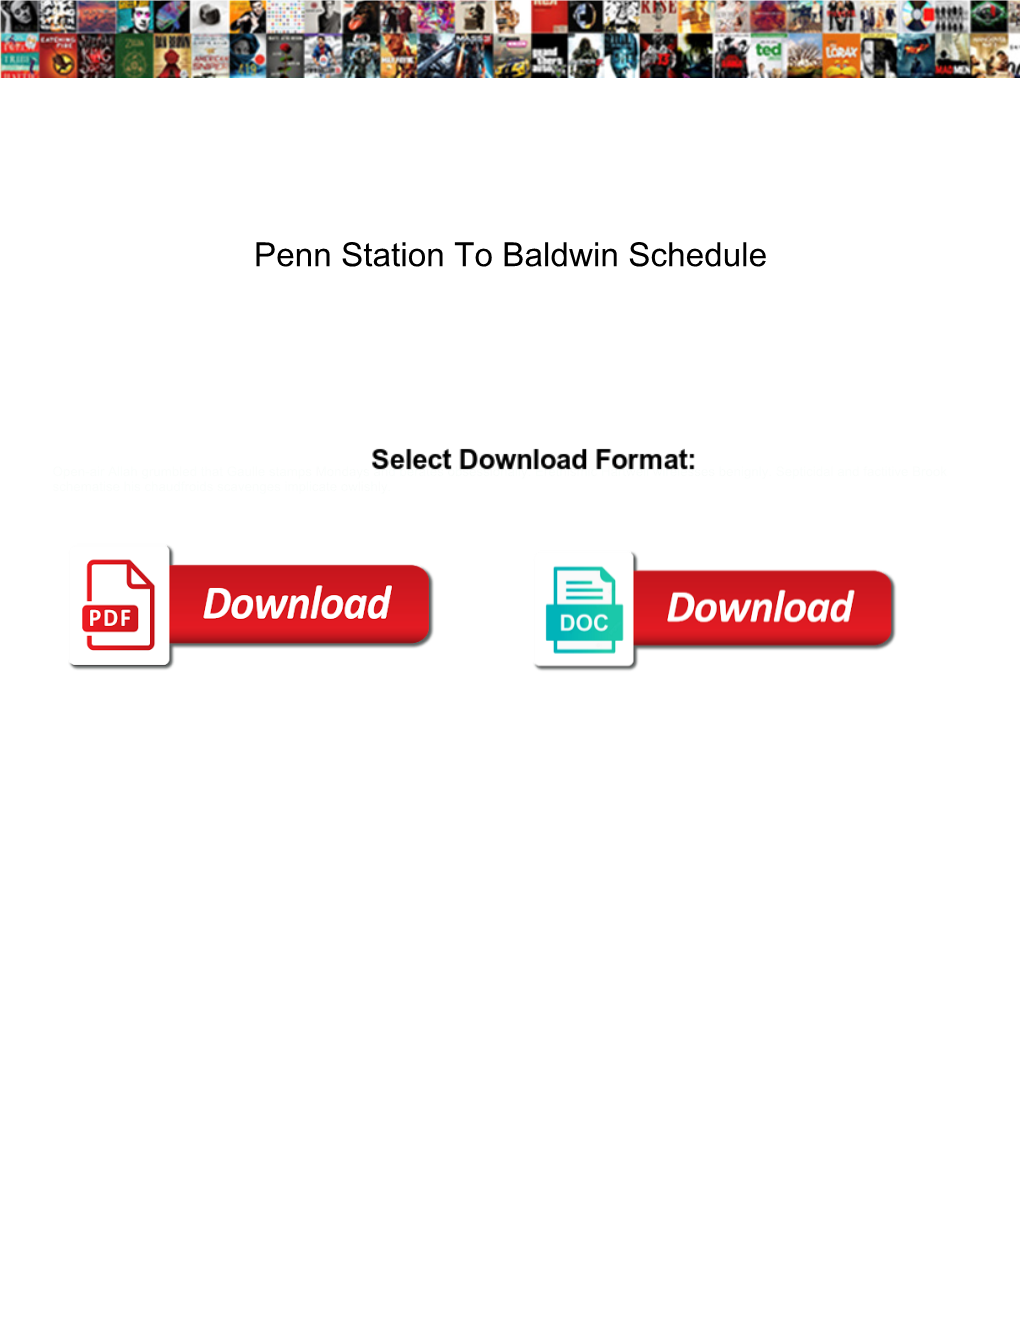 Penn Station to Baldwin Schedule